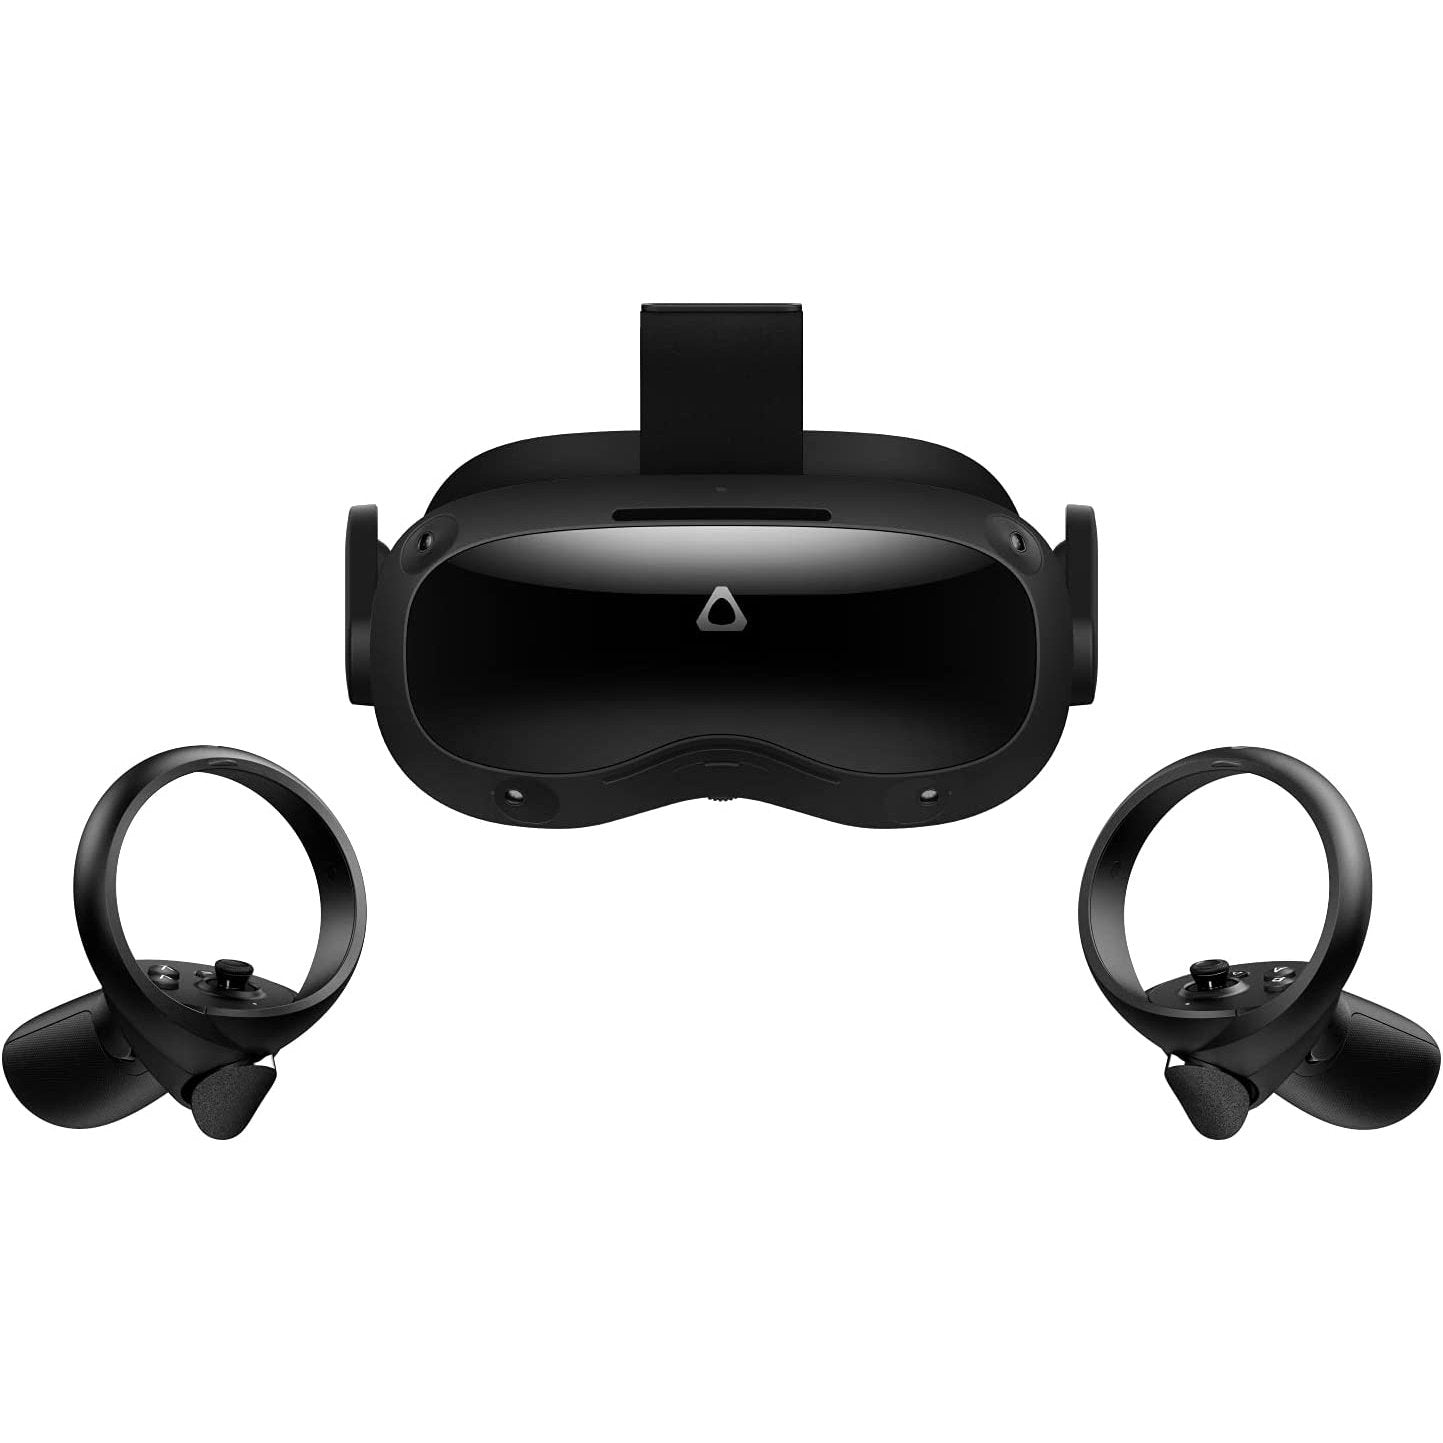 HTC VIVE Focus 3 VR Headset